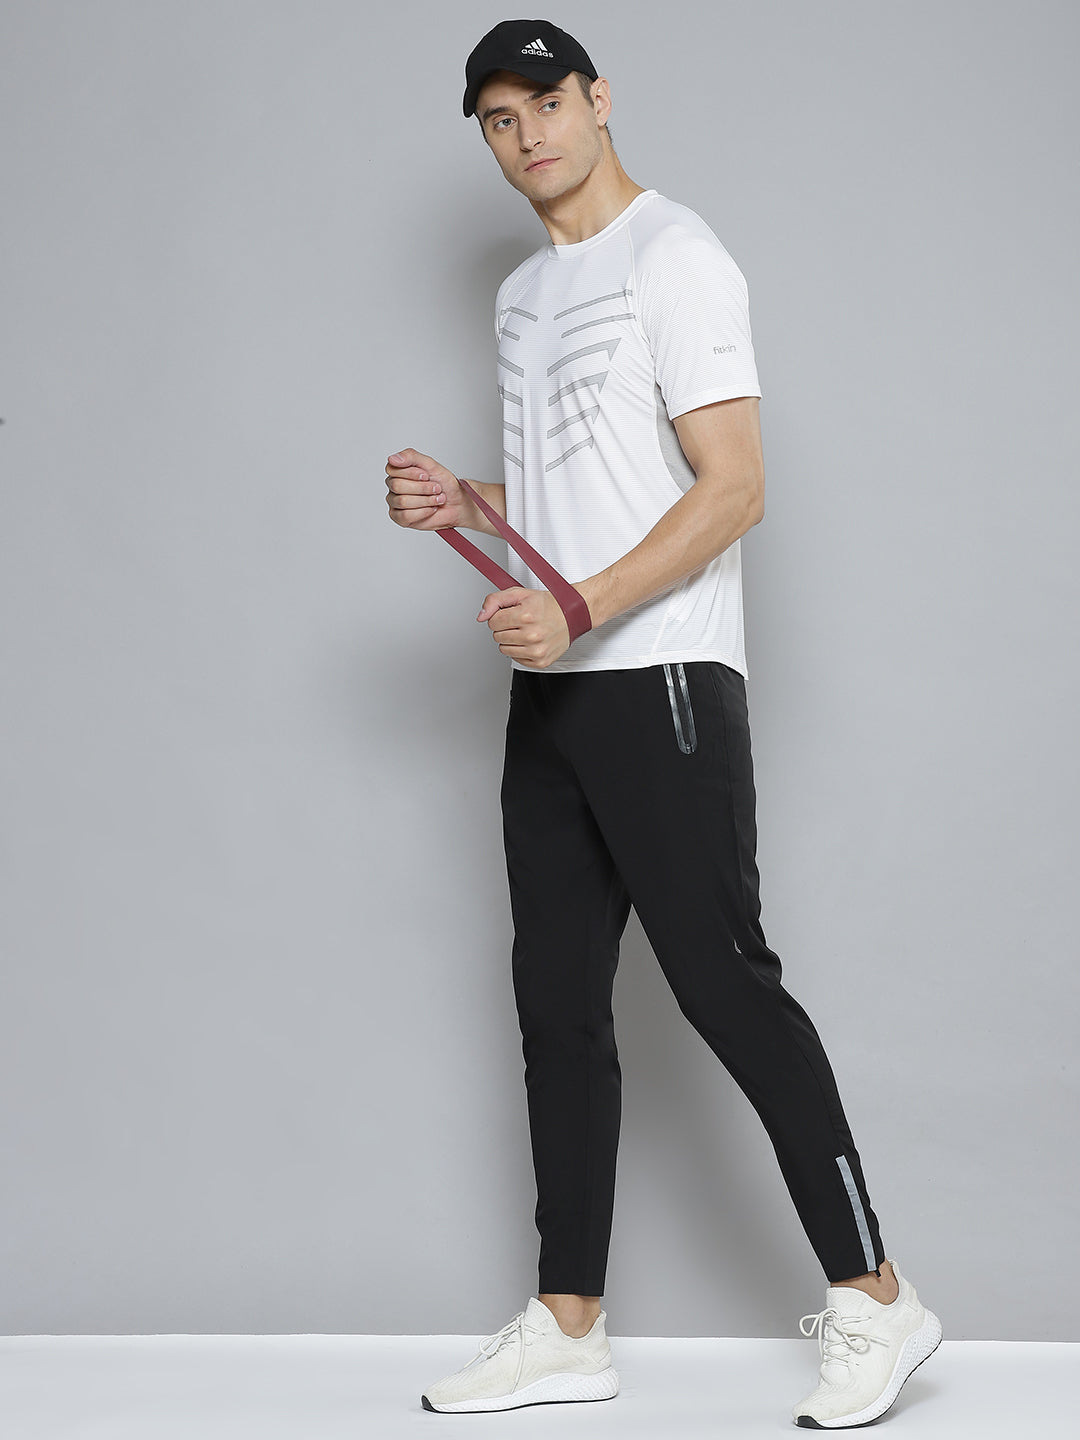 Aayomet Mens Dress Pants Men's Sweatpants with Zipper Pockets Open Bottom  Pants for Jogging, Workout, Gym, Running, Training,White M - Walmart.com